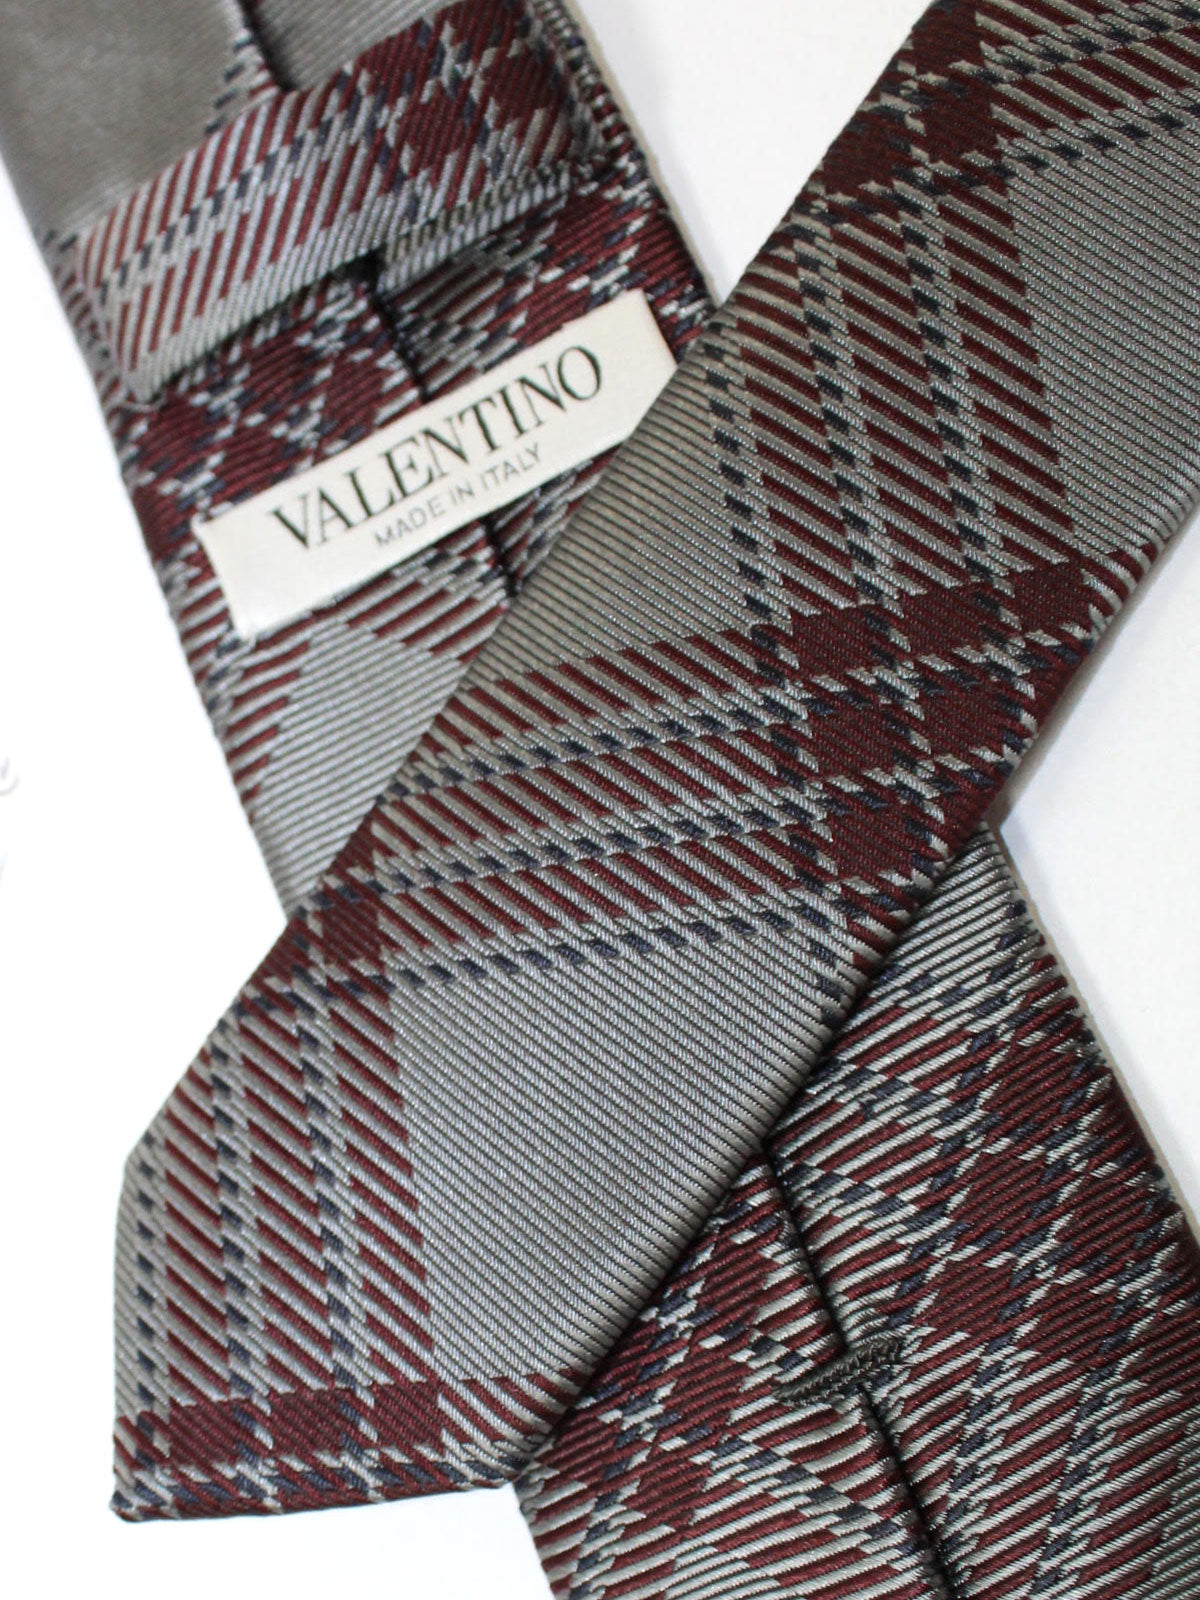 Valentino Skinny Tie - Gray Brown Glen check Design